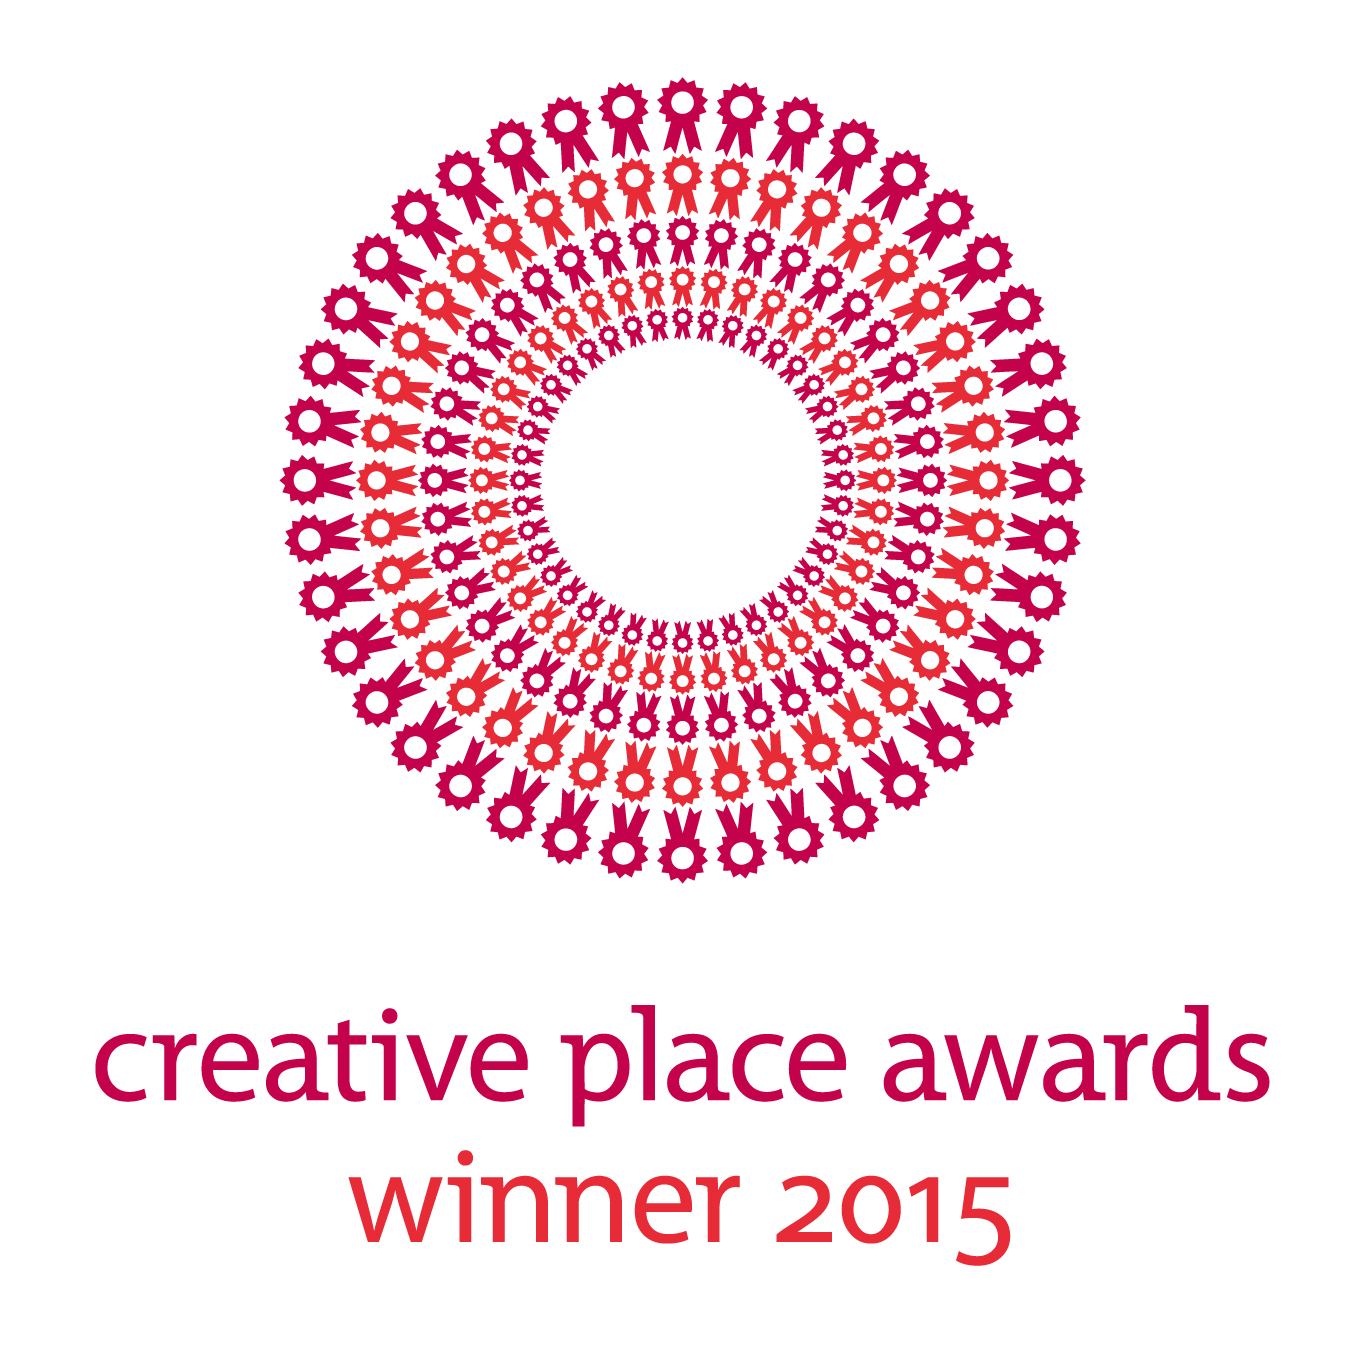 y:\creative place awards\8. logos\cpa winner logos\jpeg\cpa_winner_rgb.jpg